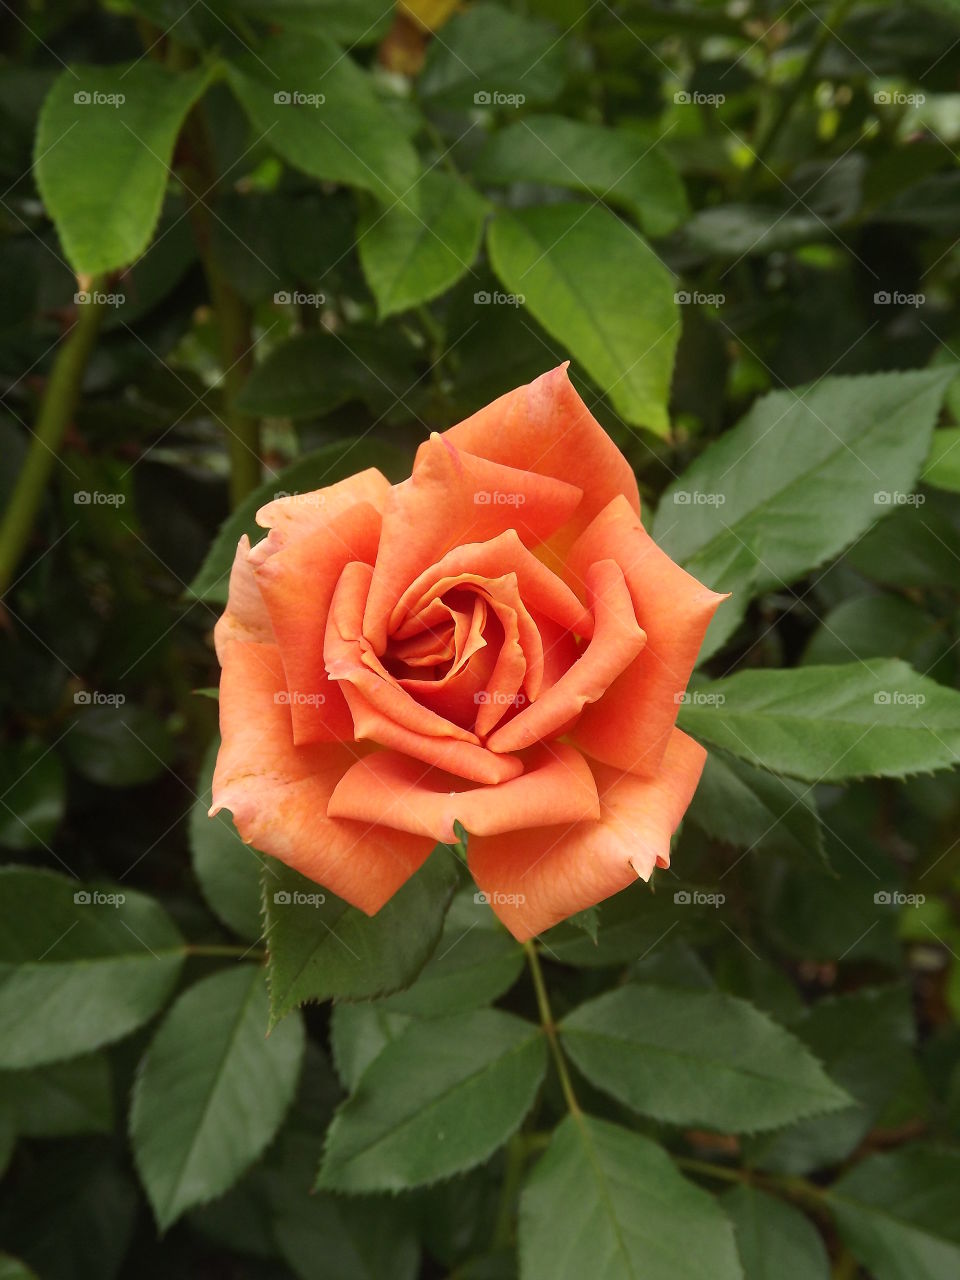 Orange Rose. I took this photo at a rose garden in Balboa Park. 